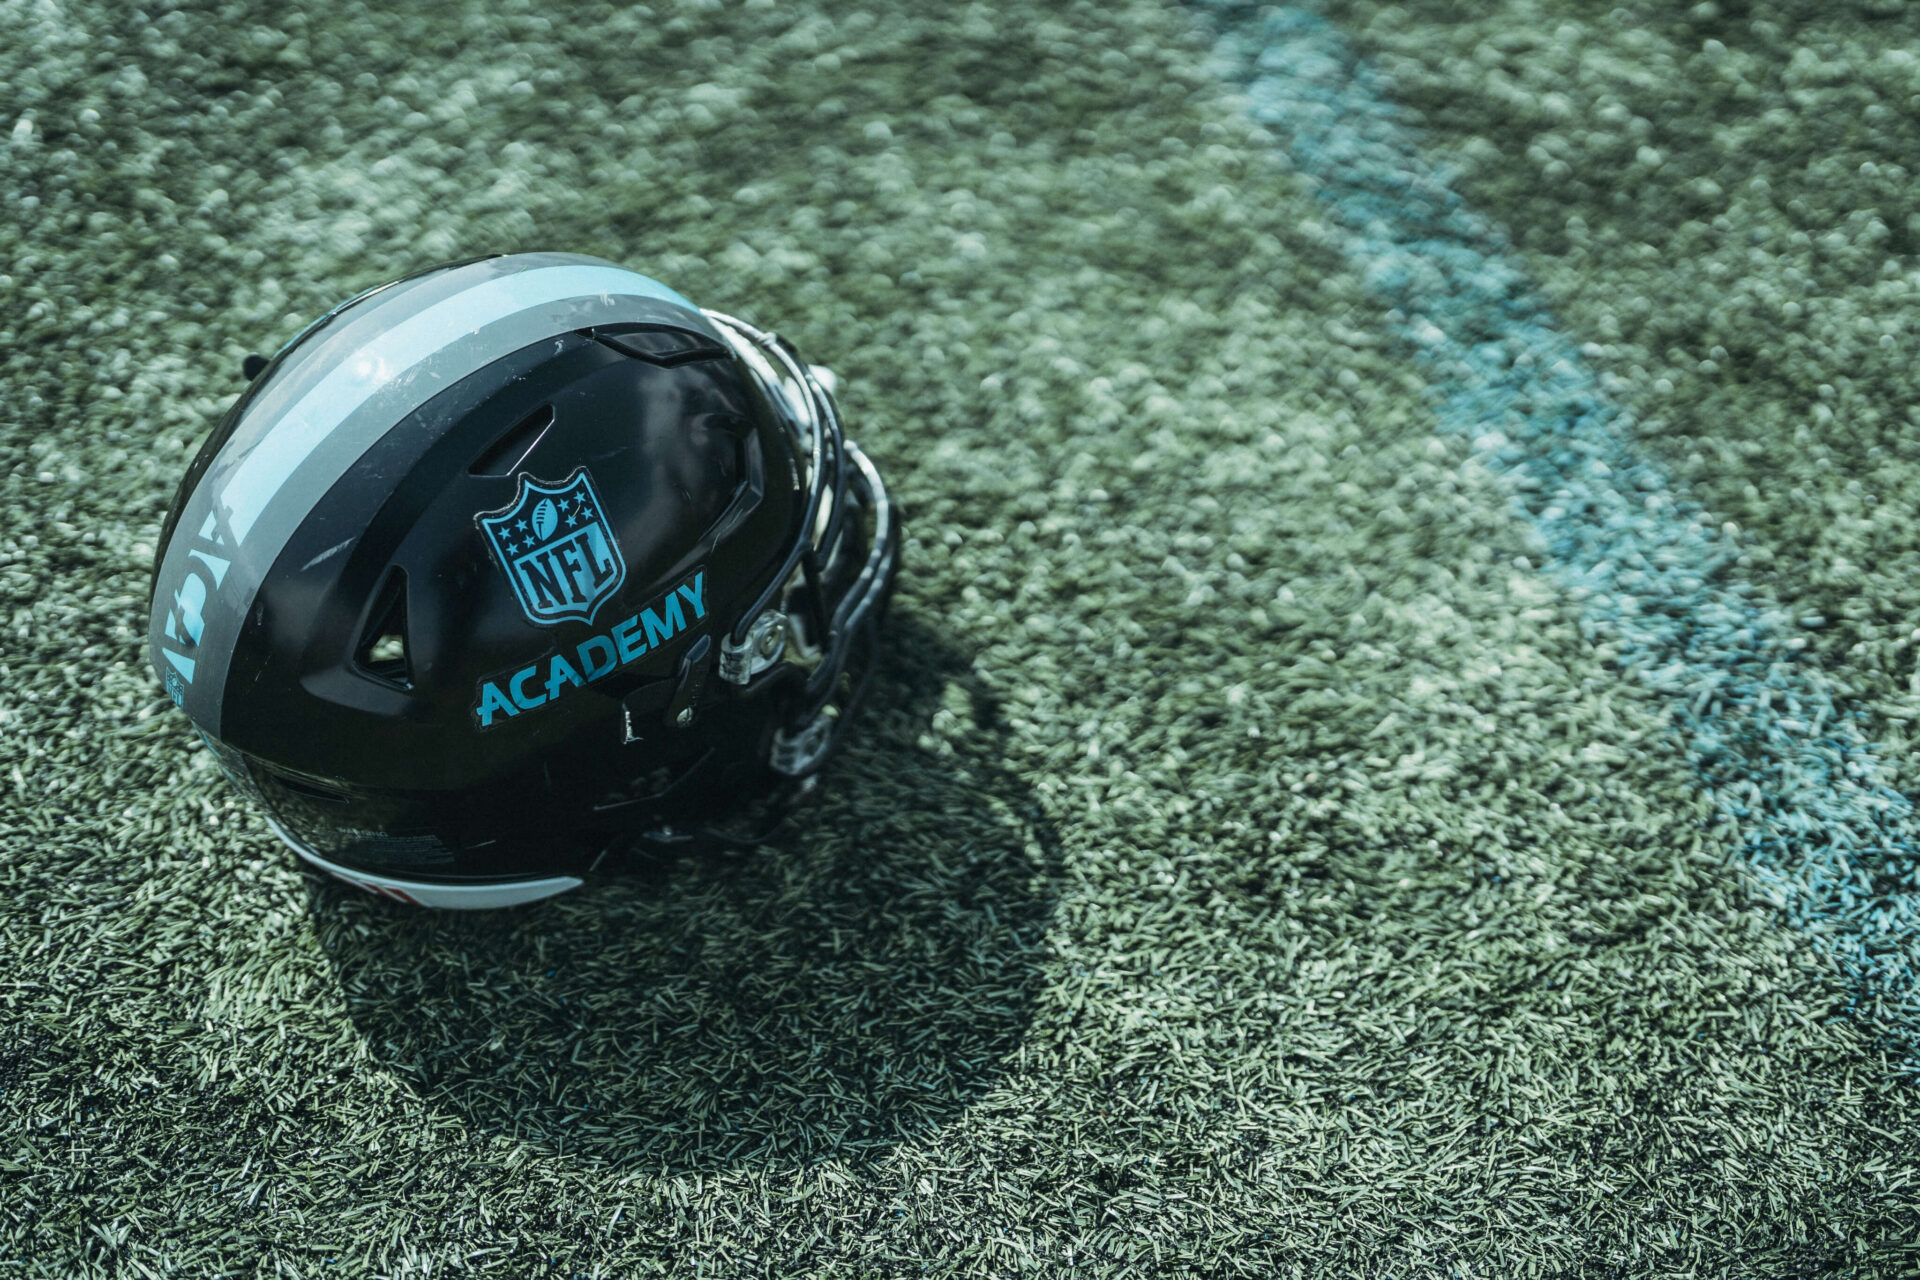 NFL Academy helmet